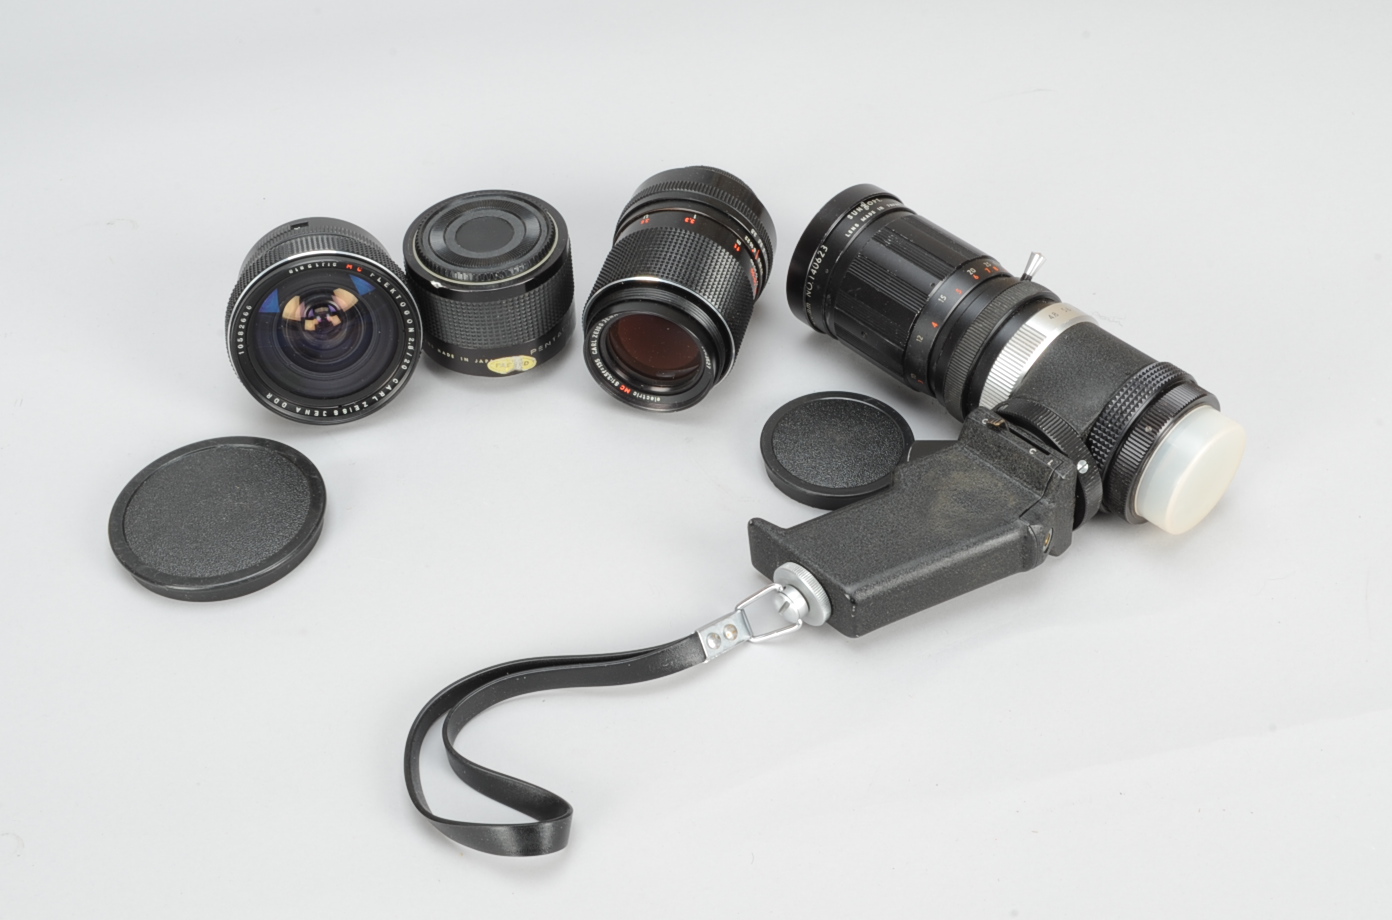 Carl Zeiss Jena M42 Lenses, an Electric MC Flektogon 20mm f/2.8 lens, condition G, an Electric MC